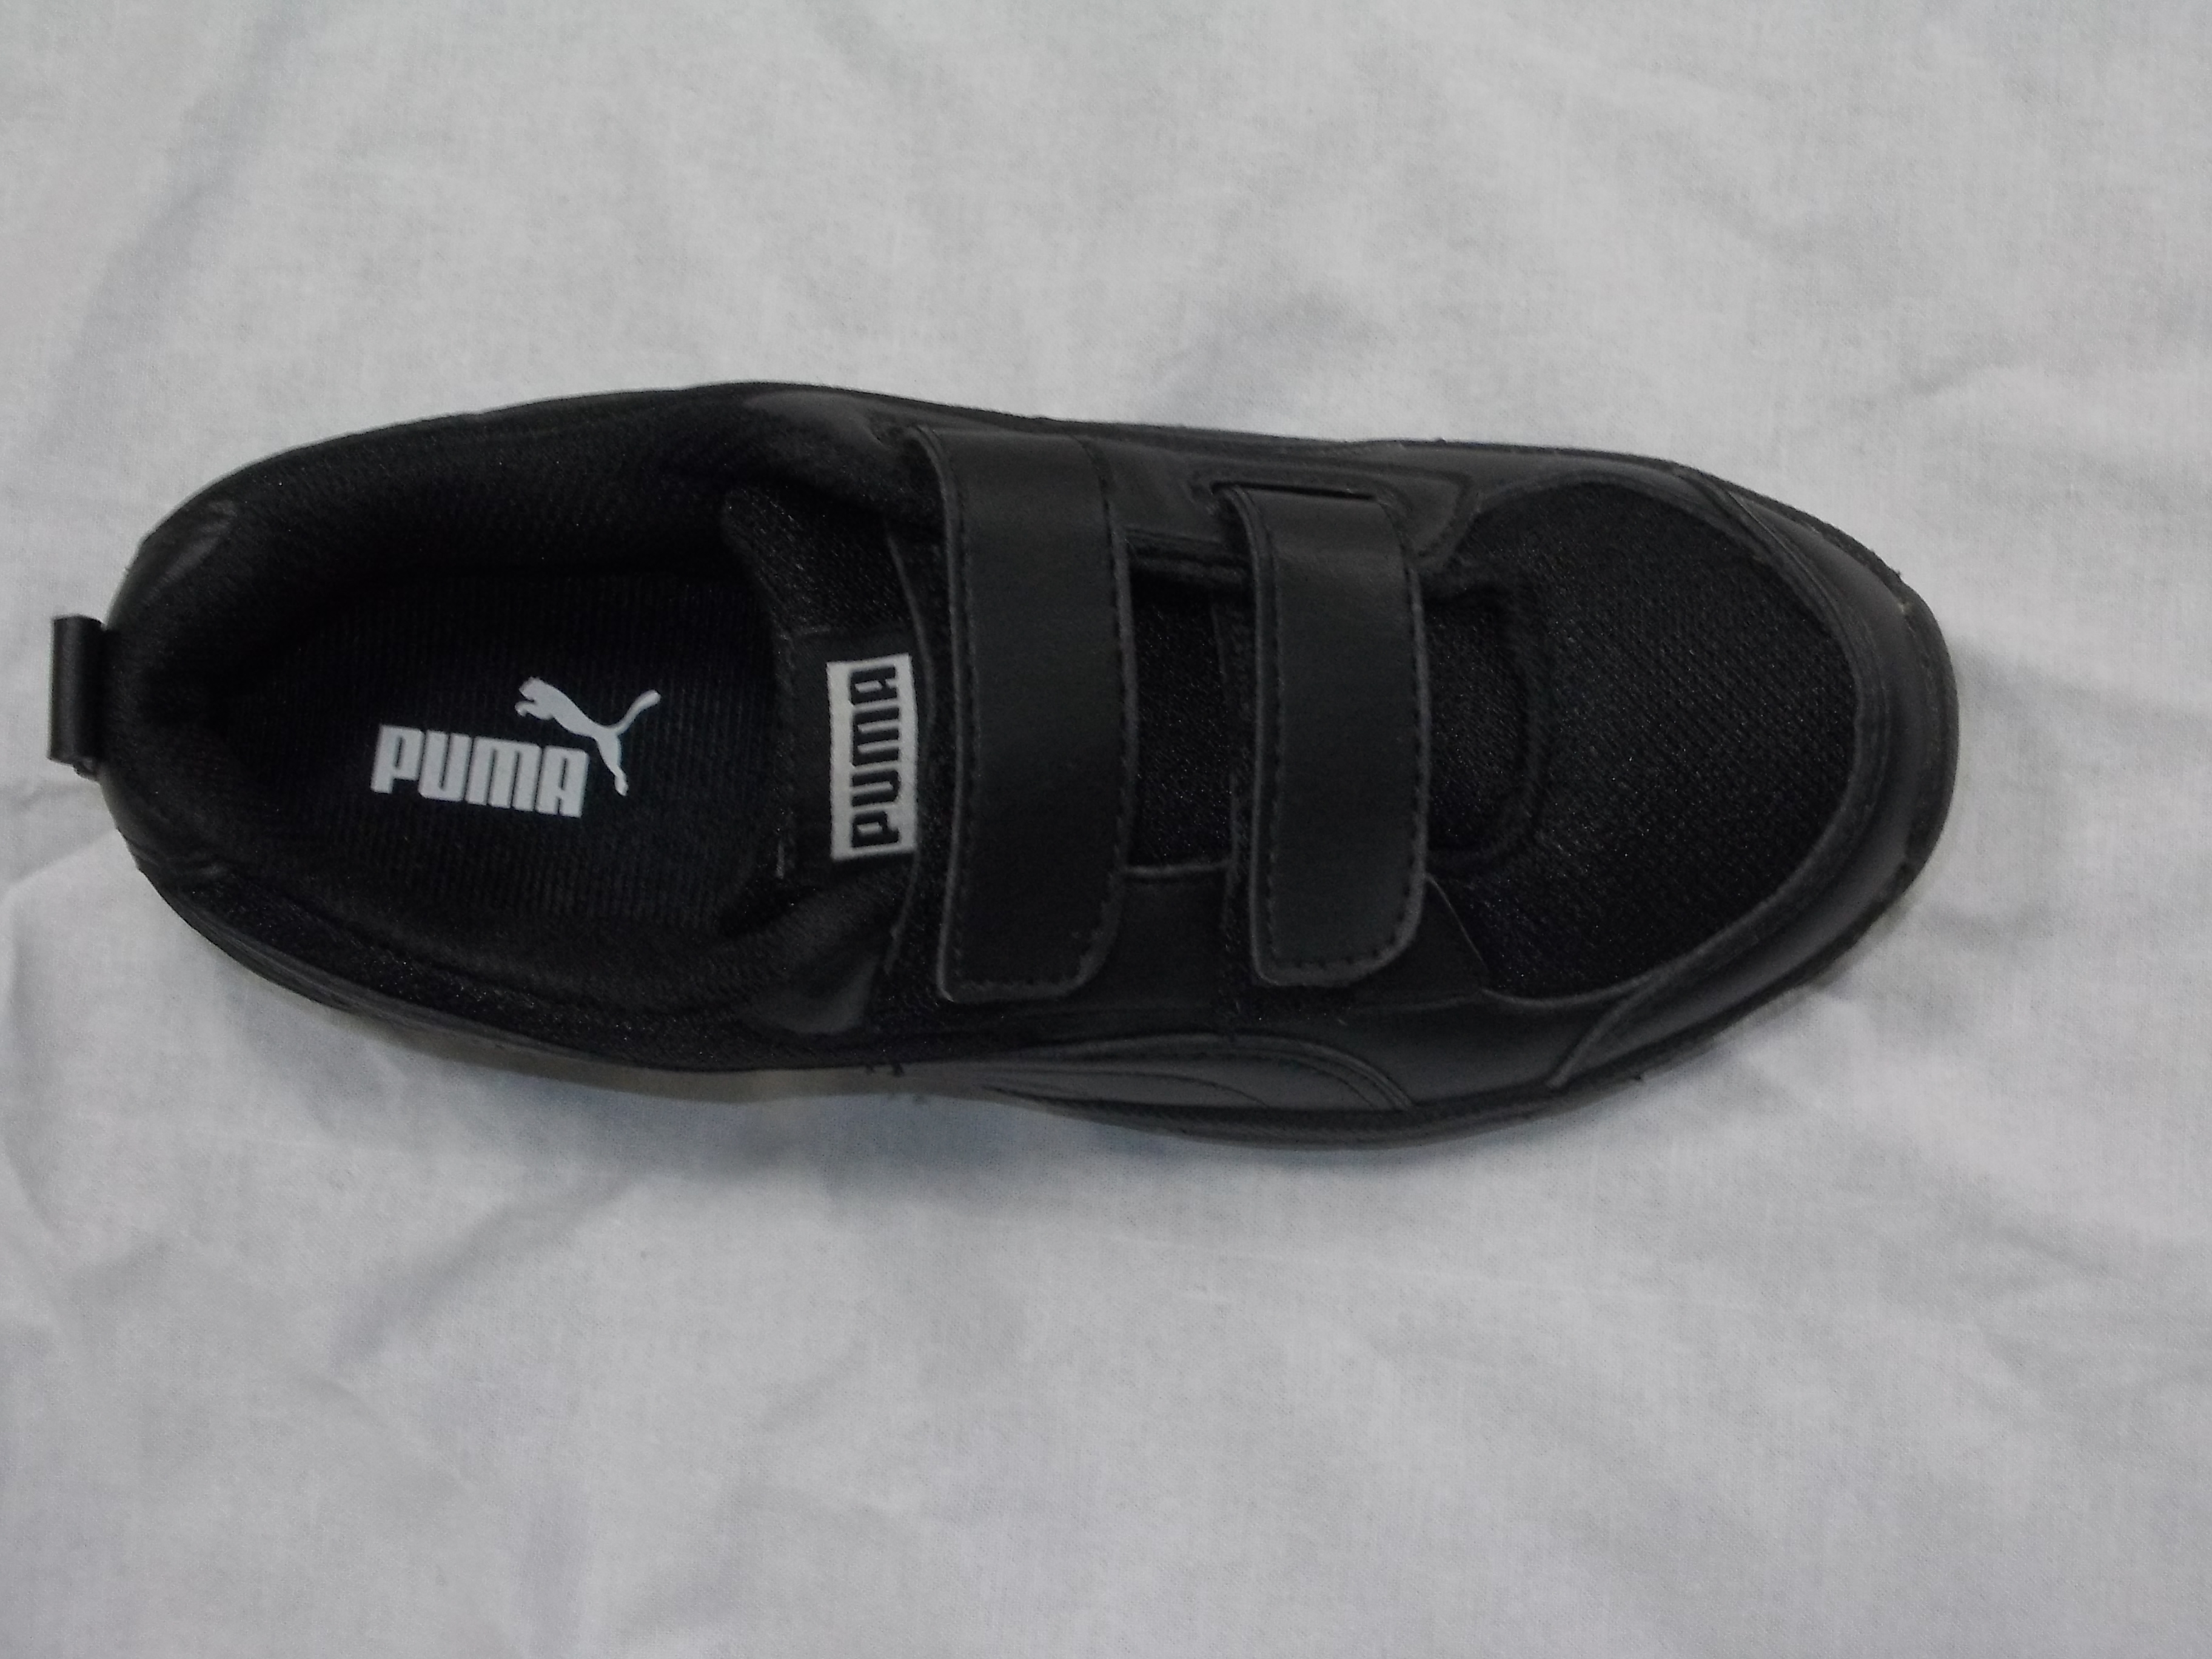 puma school shoes